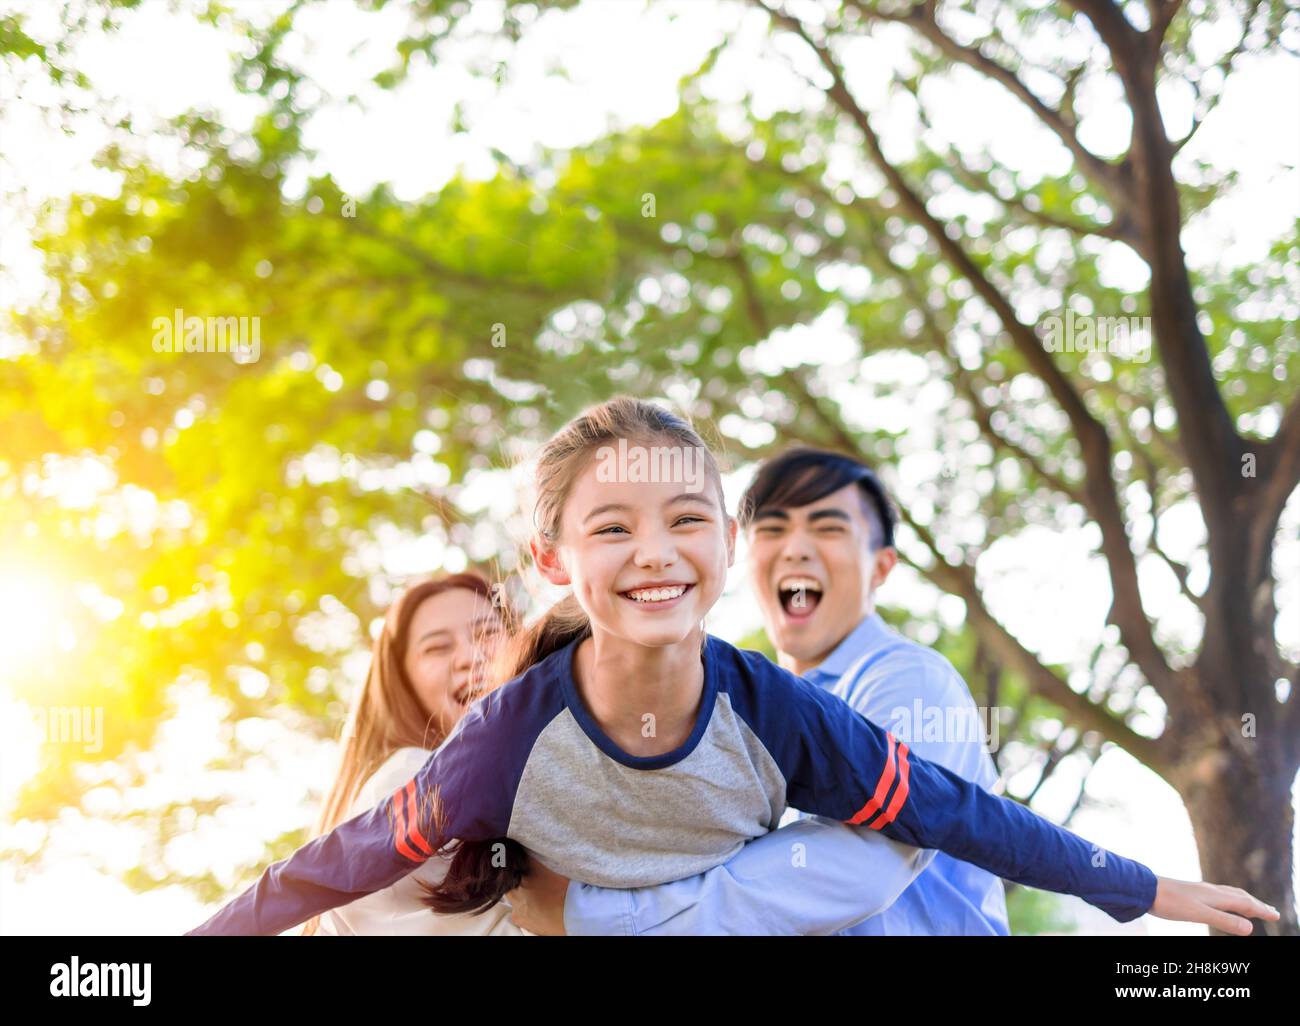 Happy Family having fun in the park Stock Photo